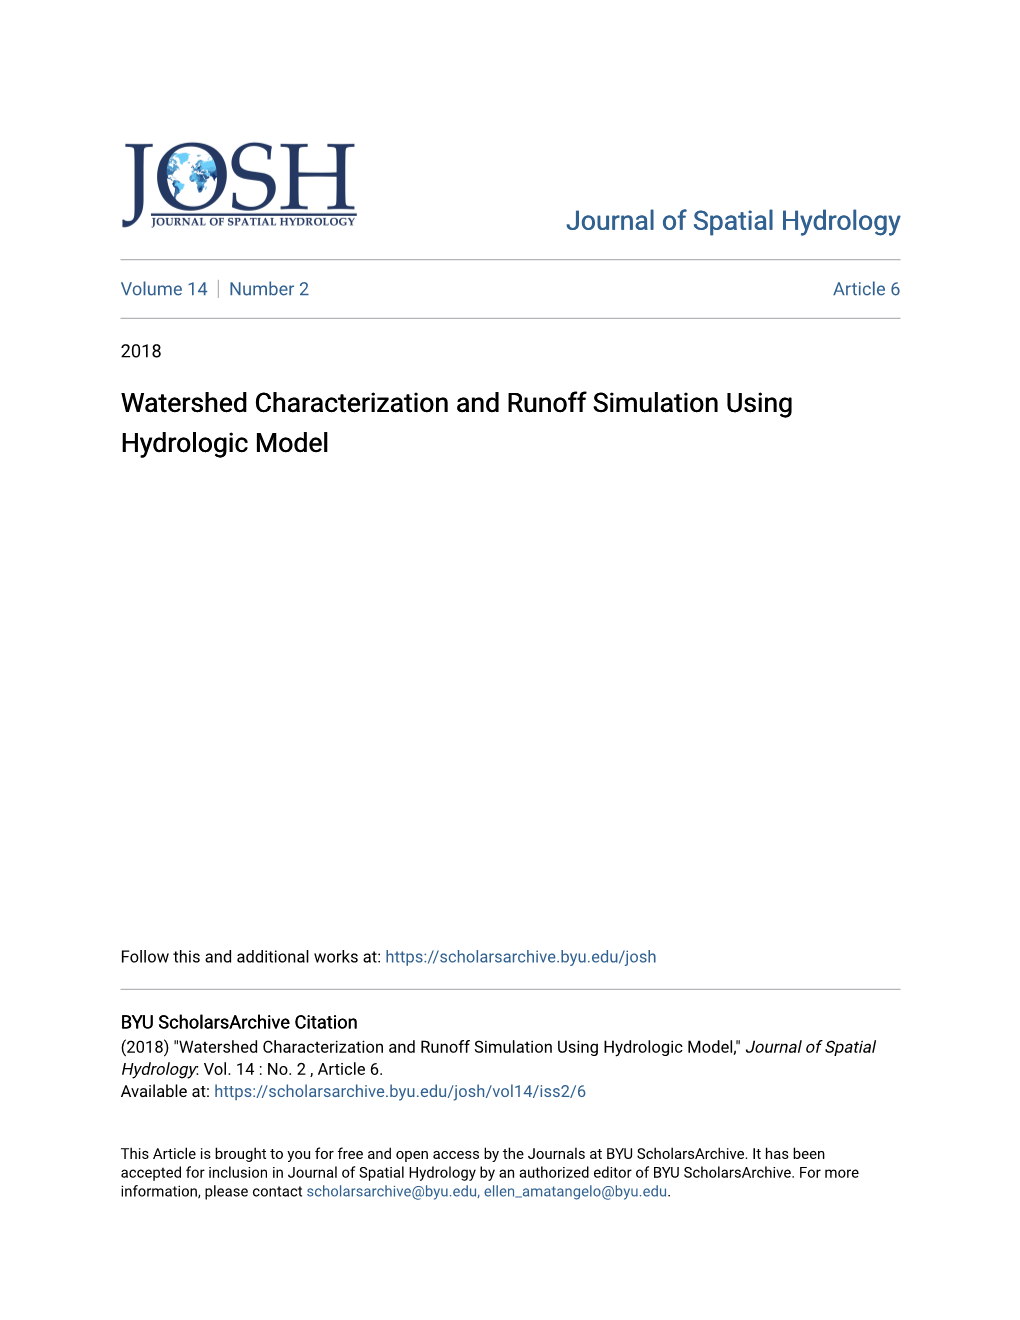 Watershed Characterization and Runoff Simulation Using Hydrologic Model